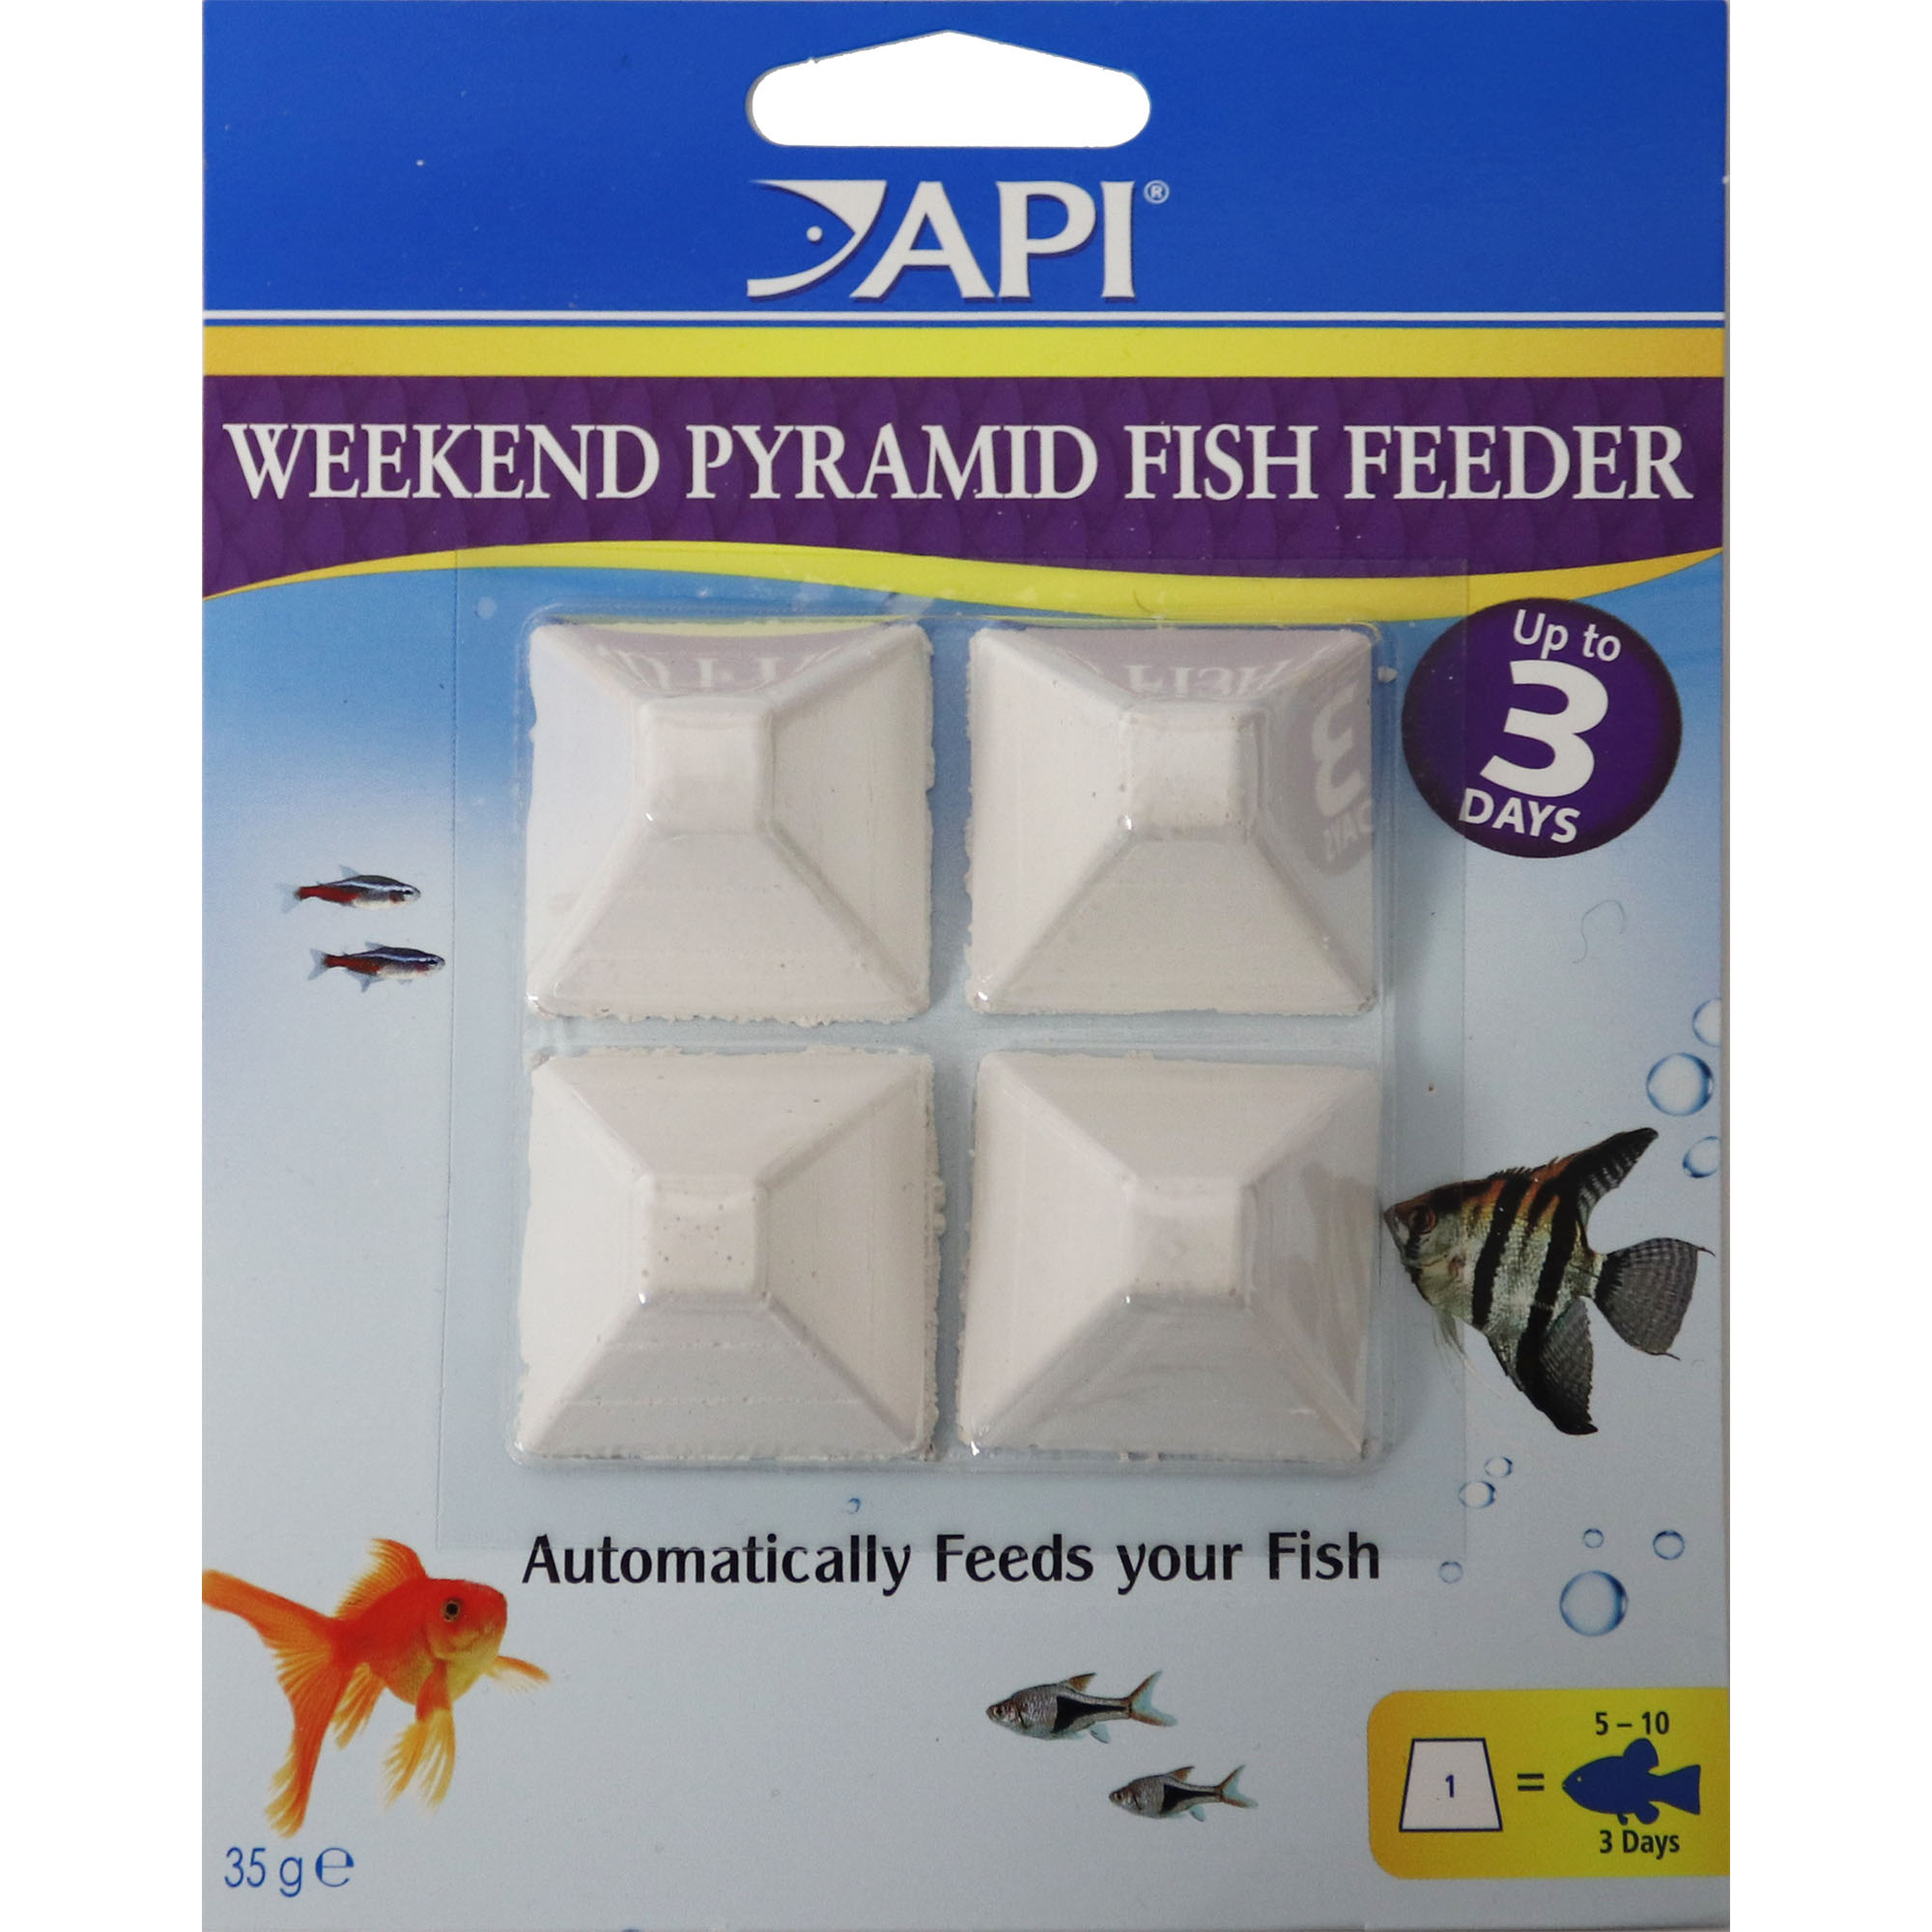 WEEKEND PYRAMID FISH FEEDER